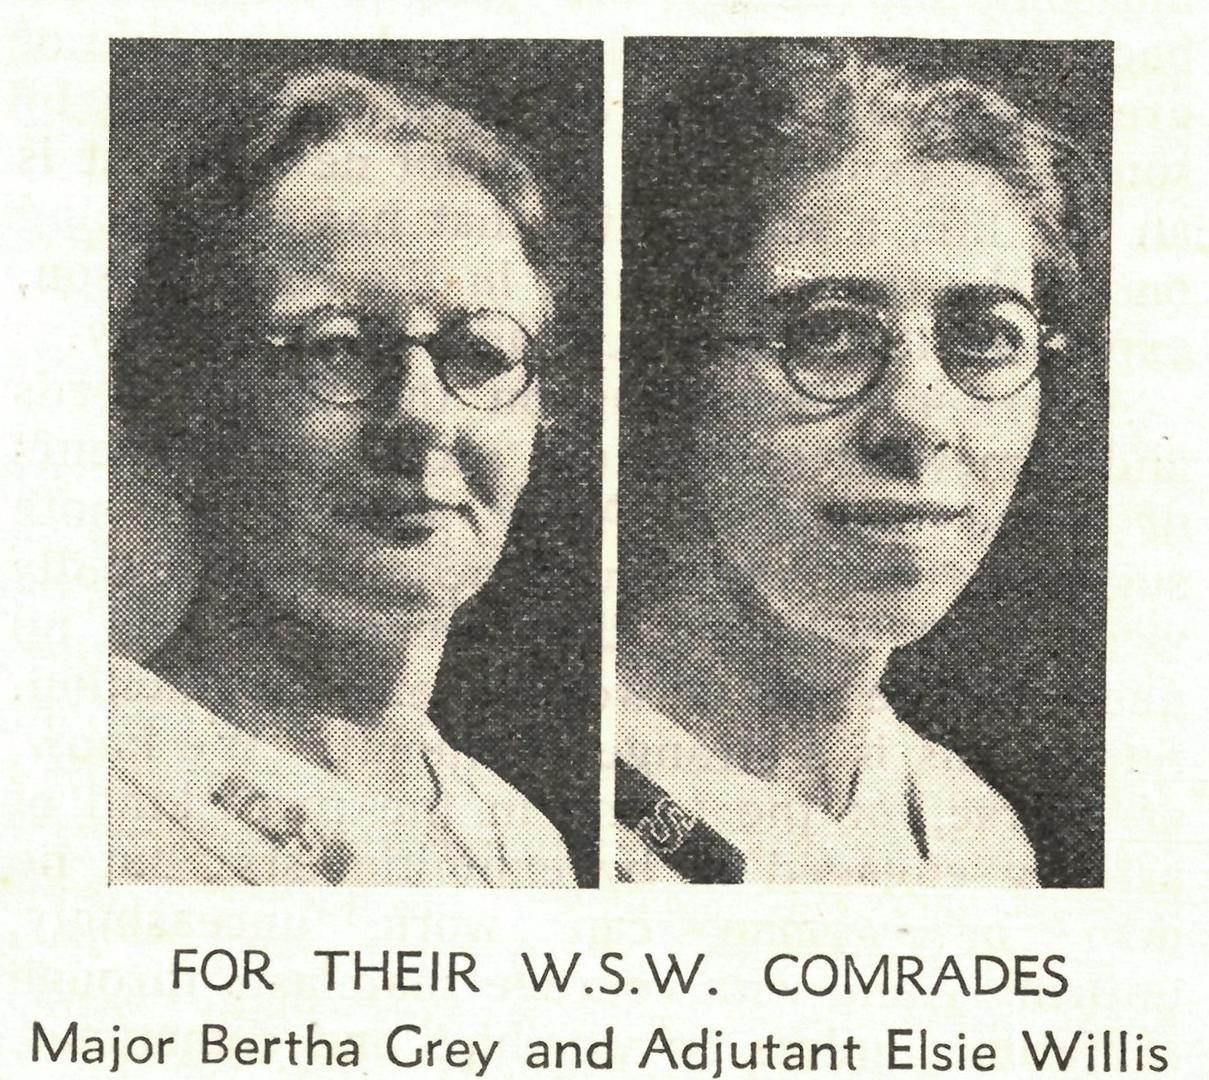 MBEs to Bertha Grey and Elsie Willis 1946